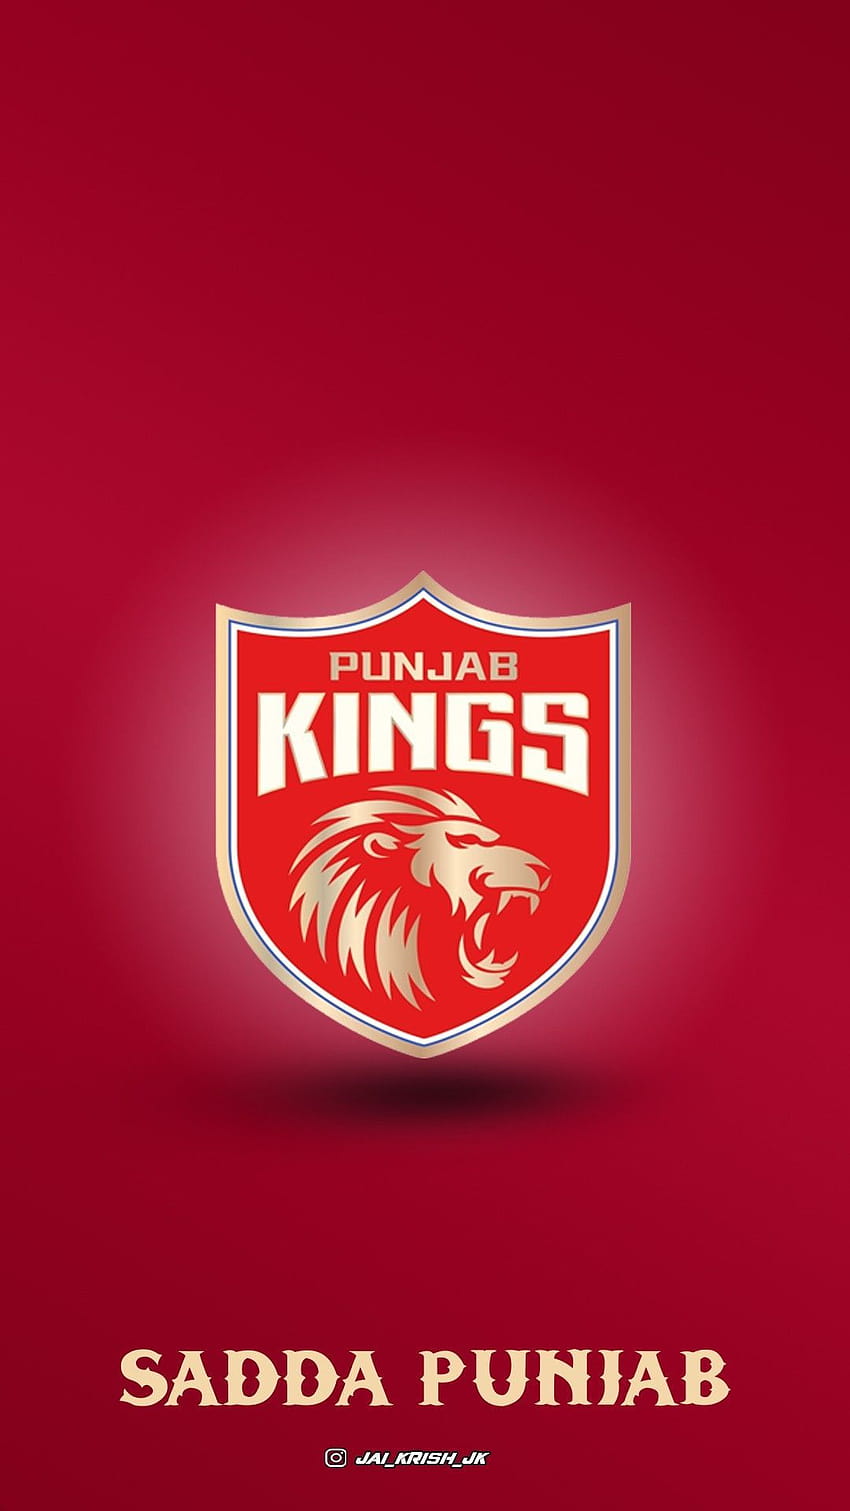 PUNJAB KINGS - K.P.H. Dream Cricket Private Limited Trademark Registration